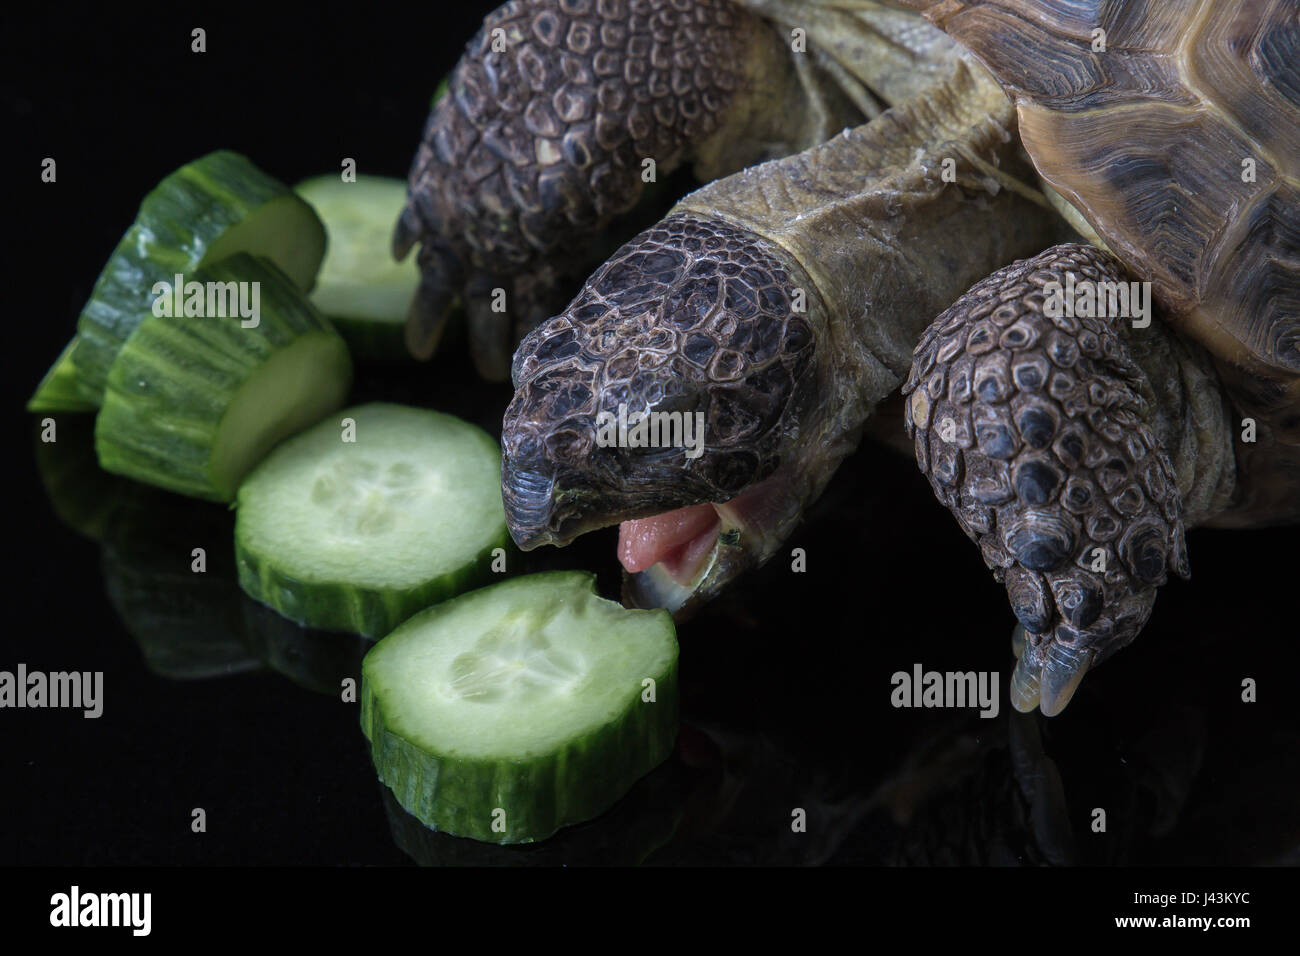 Tortoise angirly feasting on cucumber Stock Photo